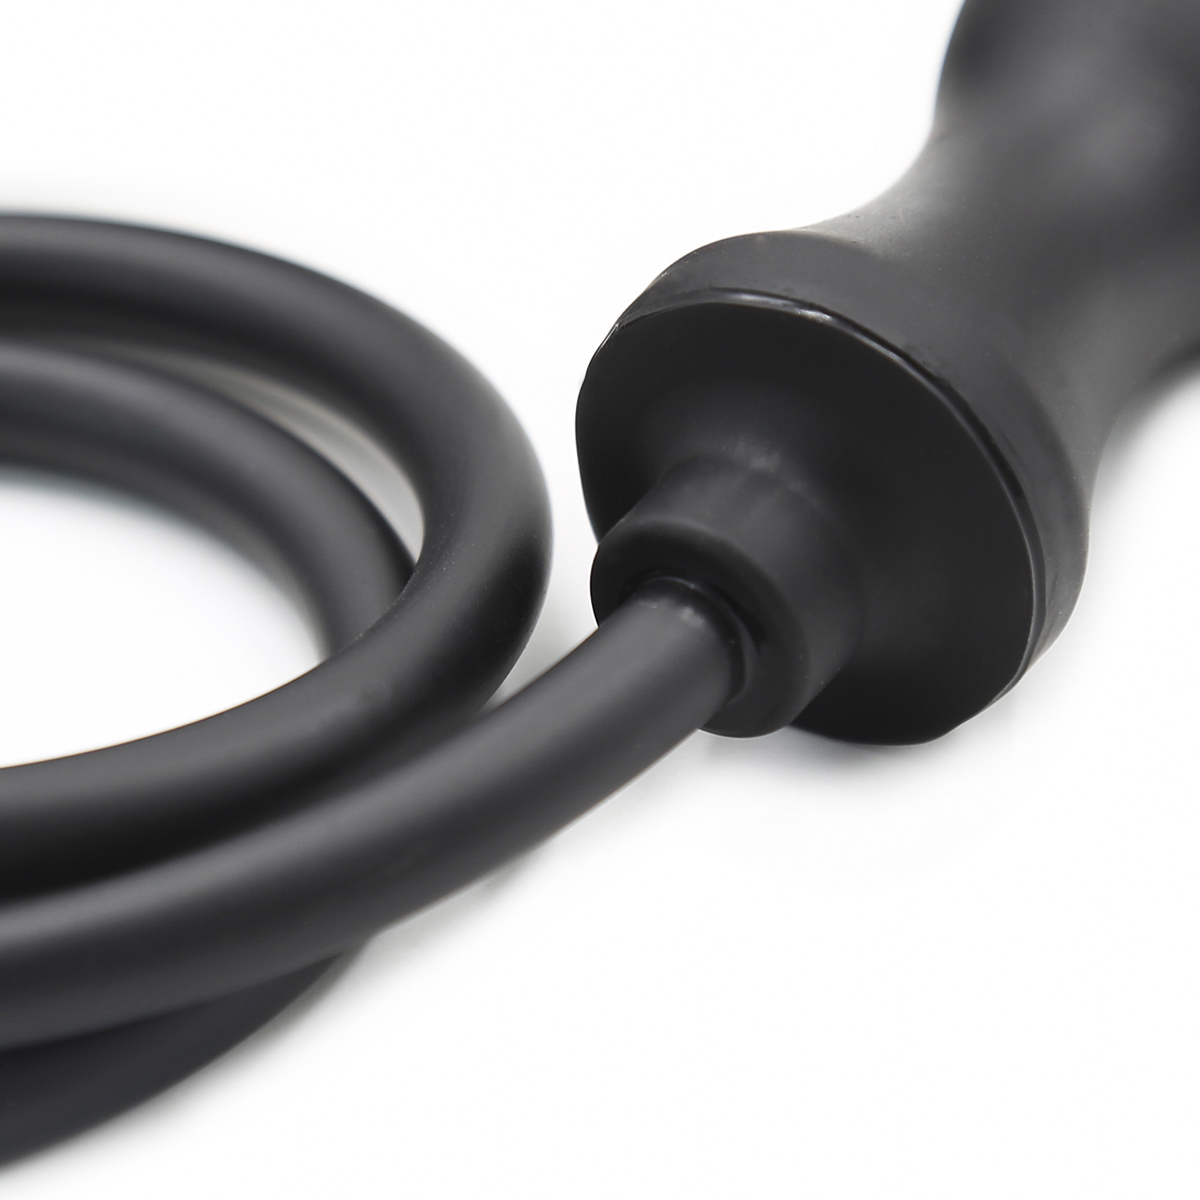 Inflatable-Anal-Plug-Black-OPR-321081-3